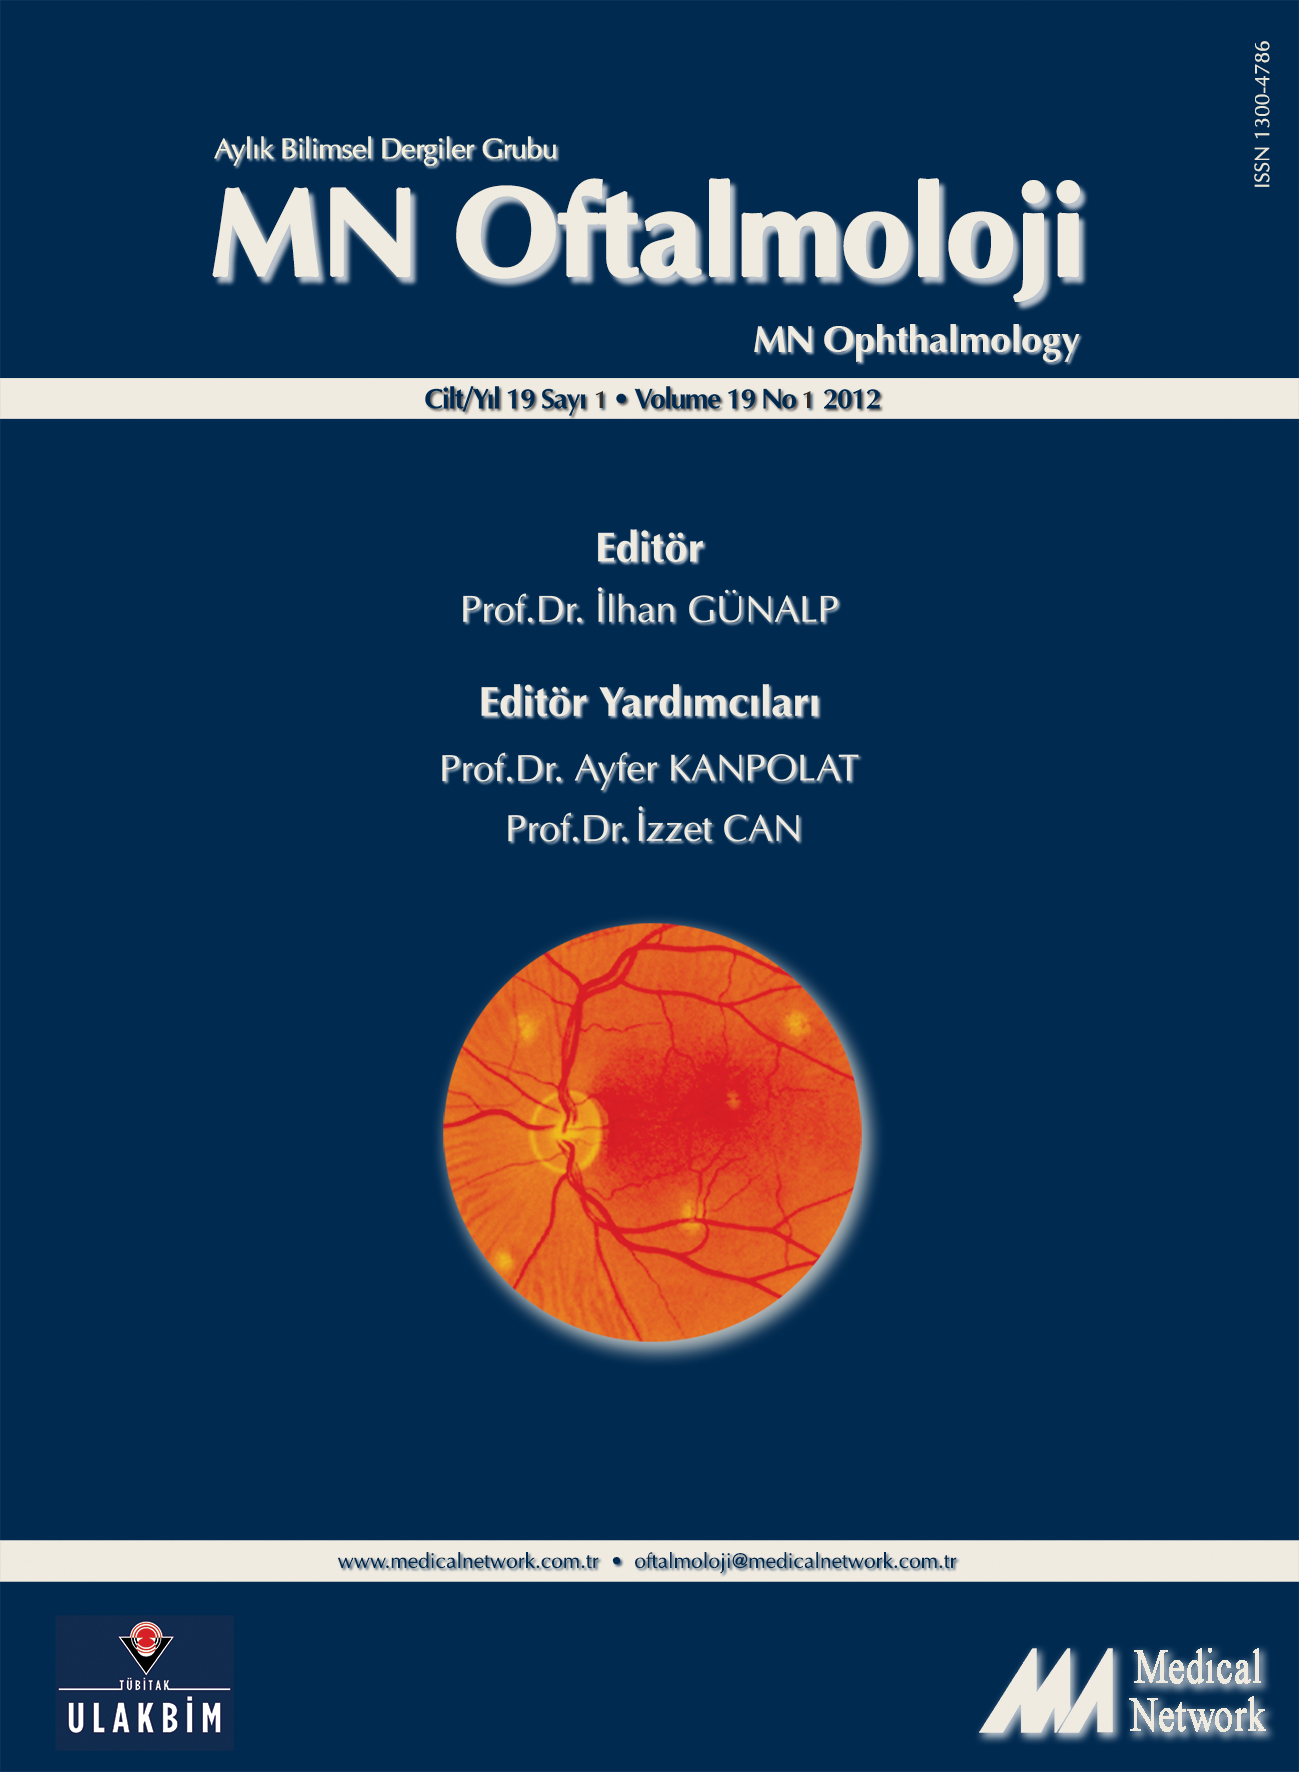 <p>MN Oftalmoloji Cilt: 19 Sayı: 1 2012 (MN Ophthalmology Volume: 19 No 1 2012)</p>